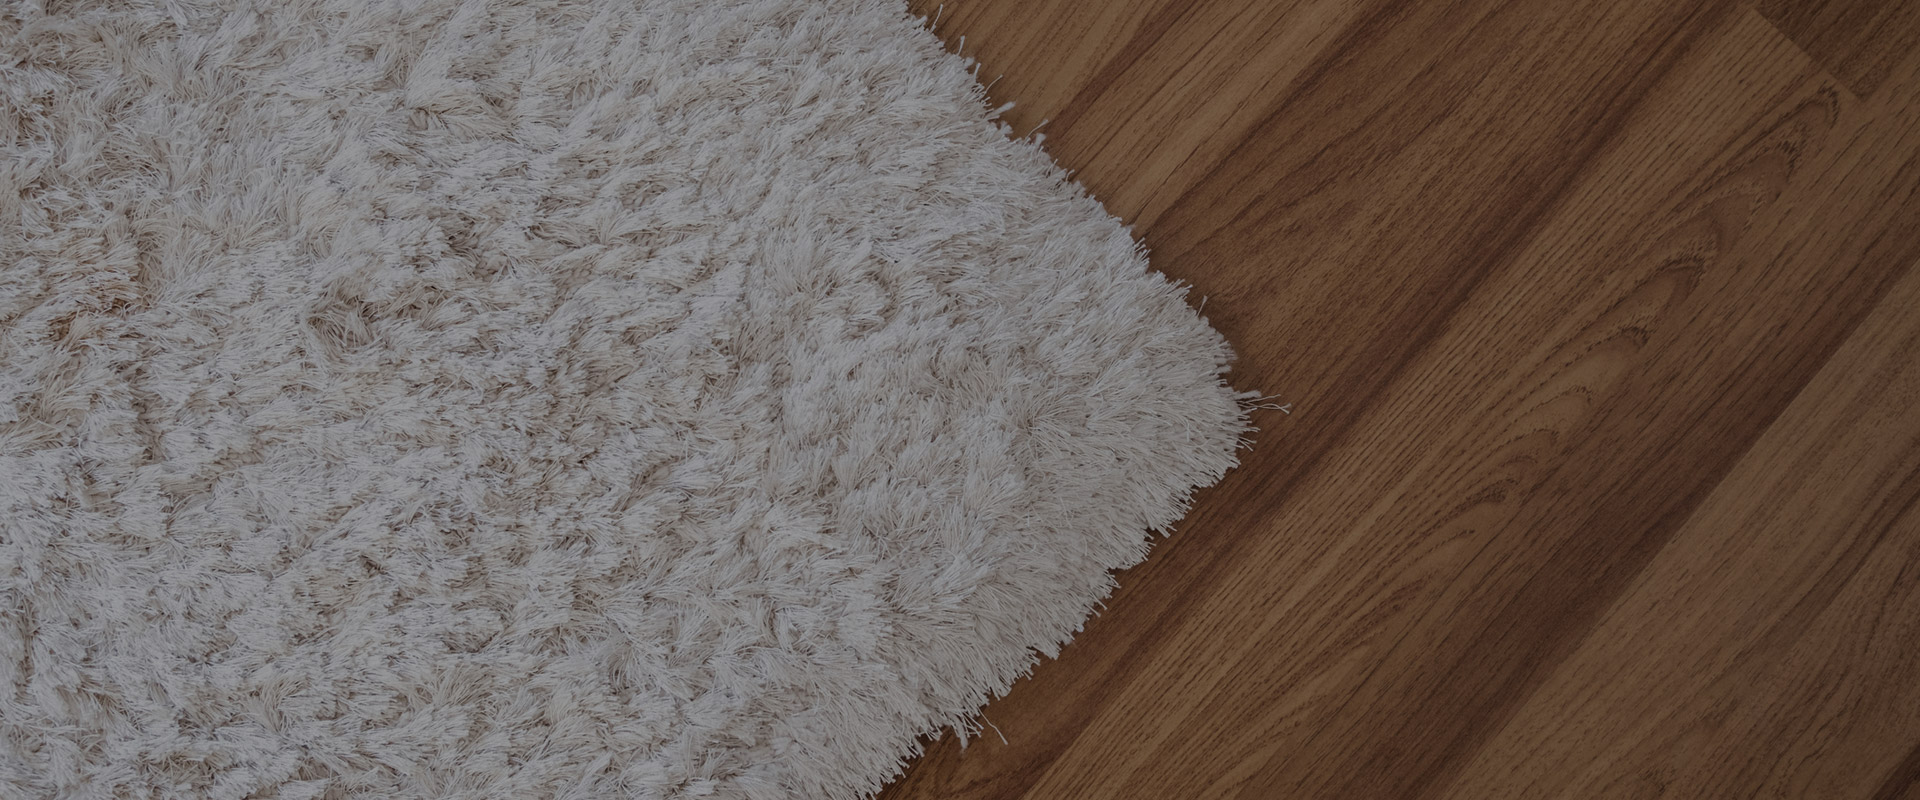 wooden floor with shag rug